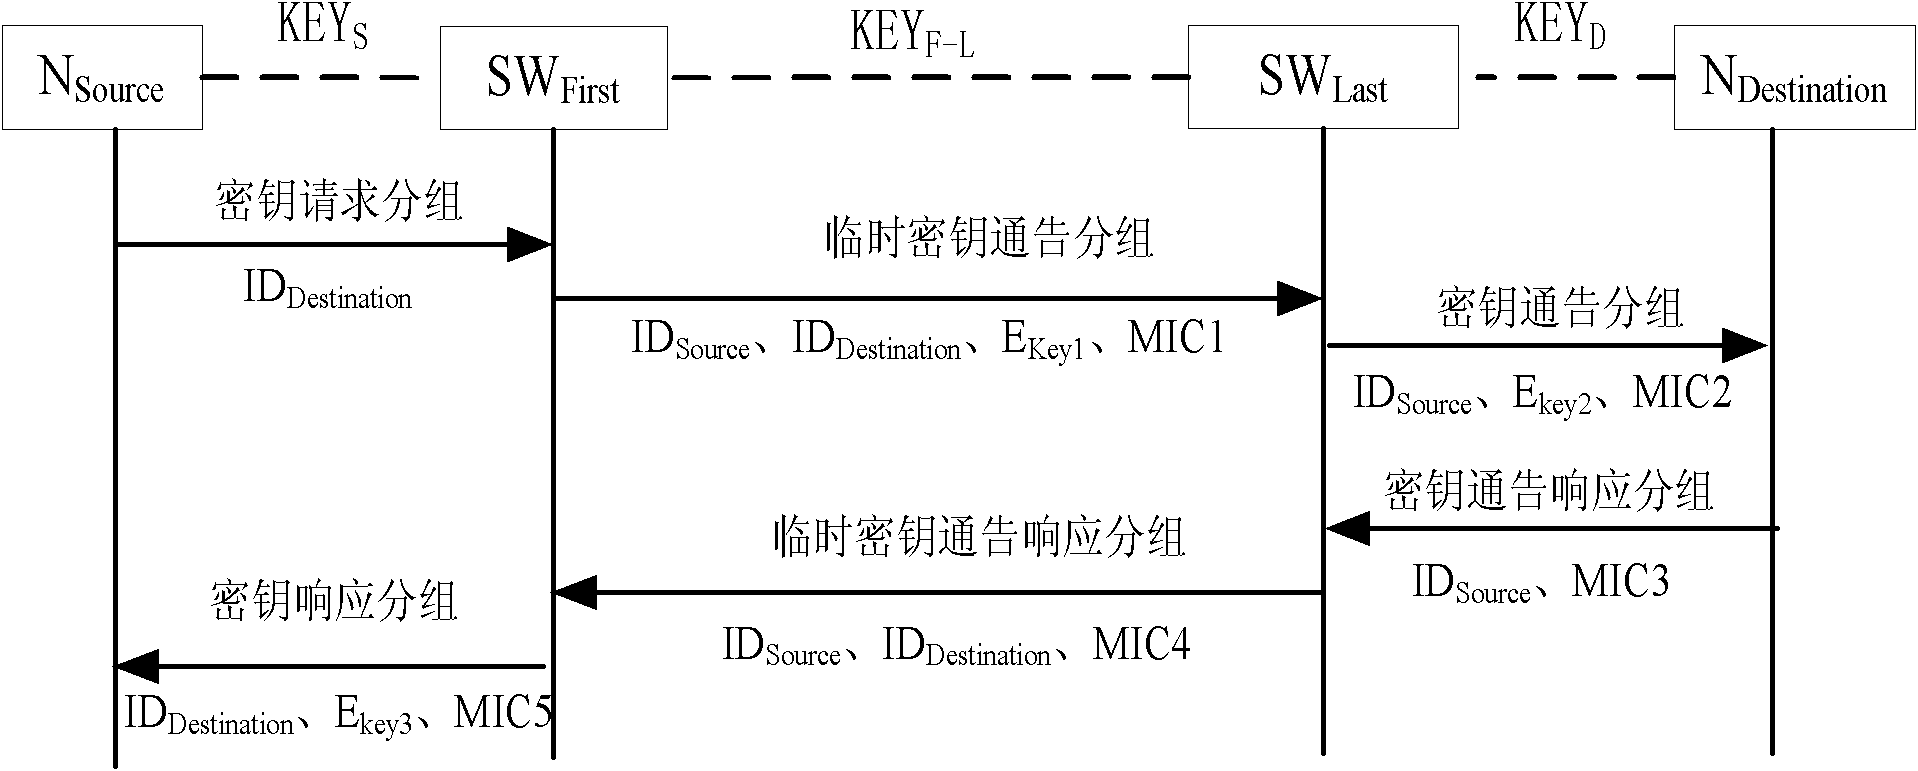 Method and system for establishing safe connection between nodes